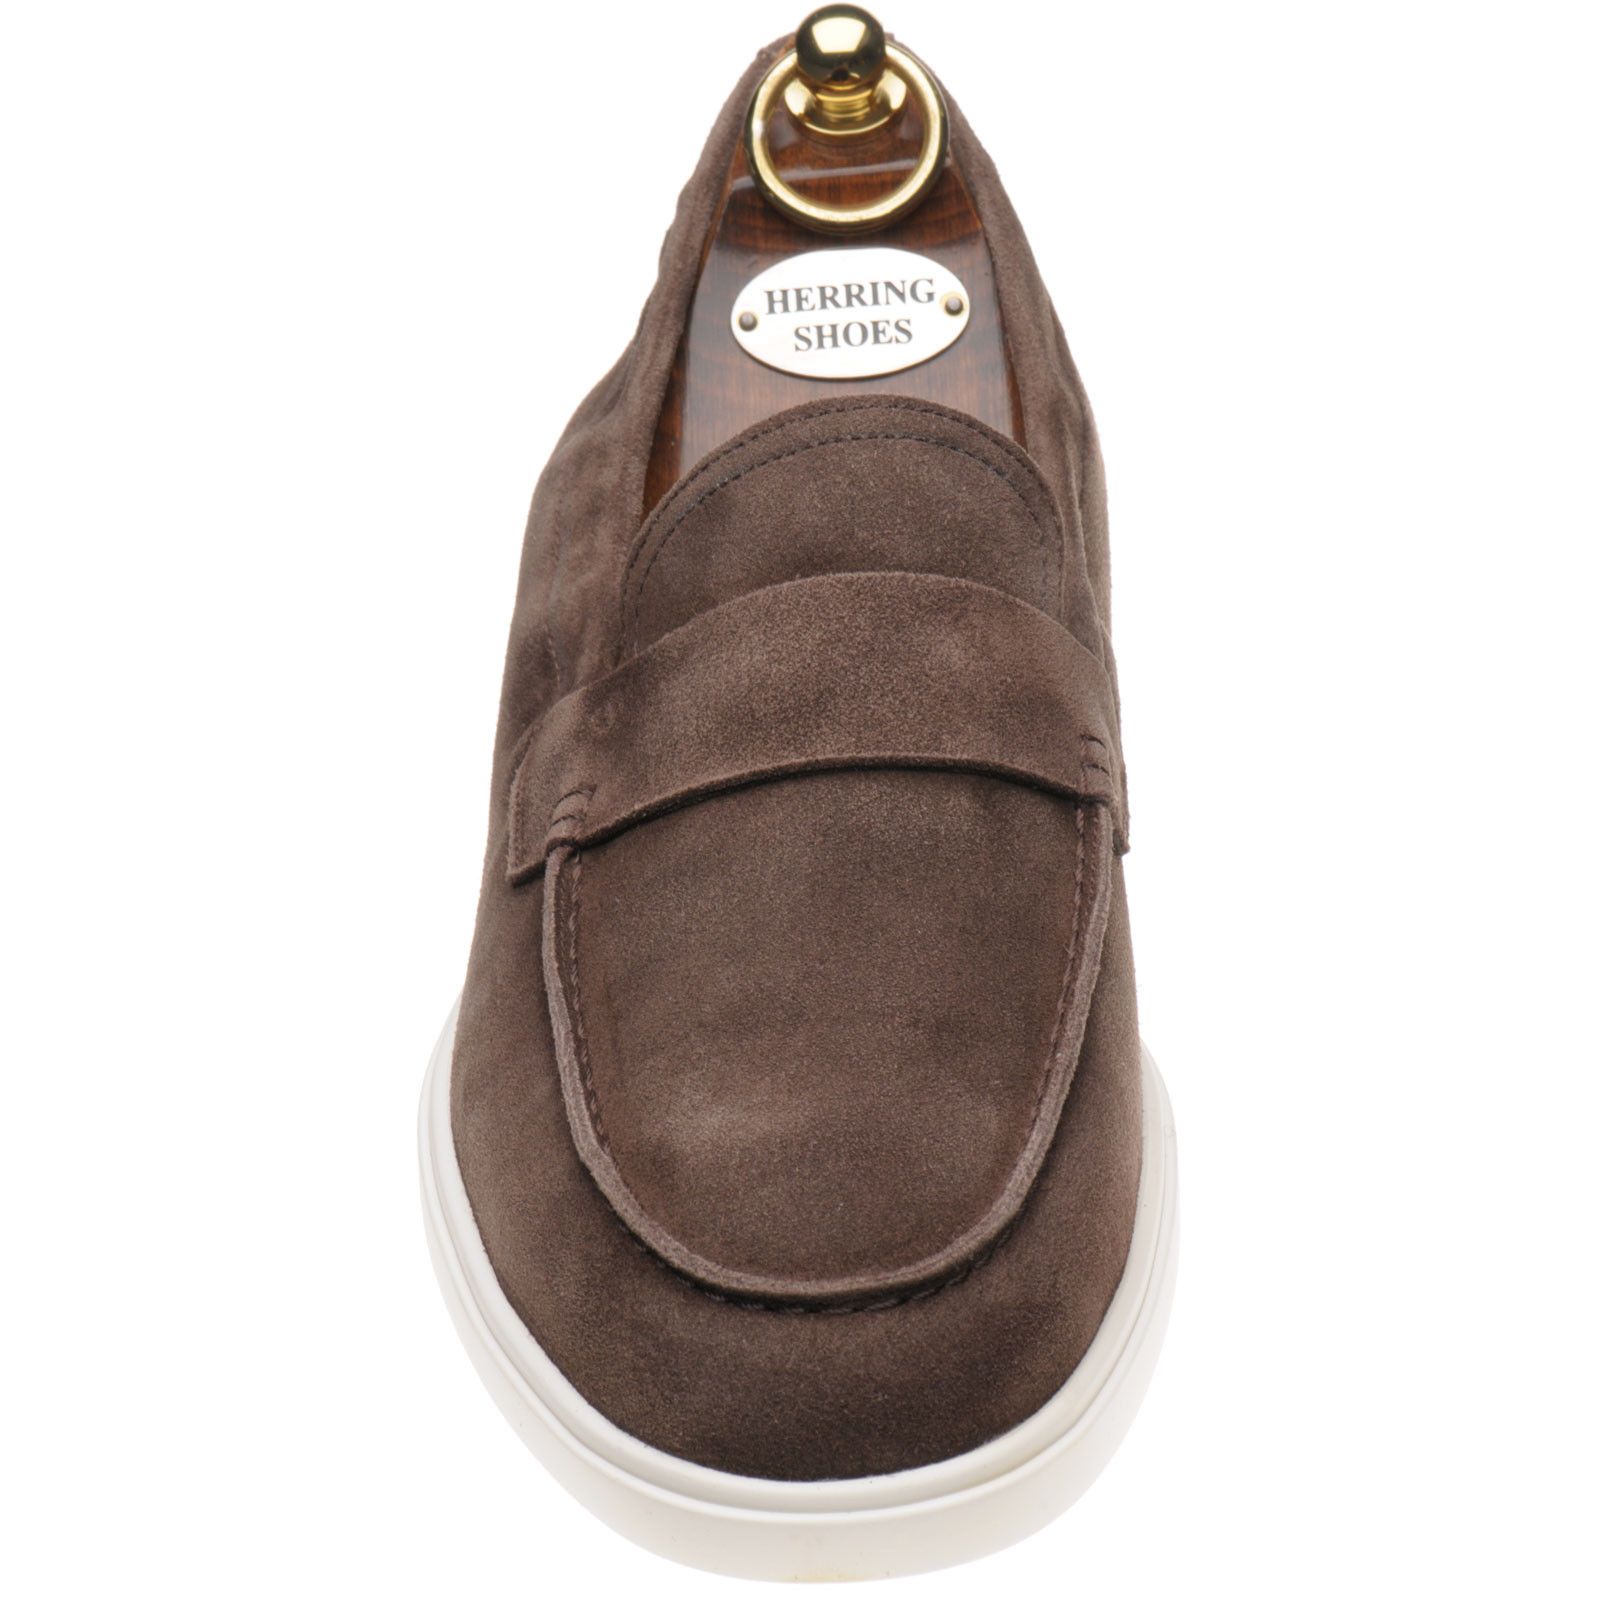 Herring shoes | Herring Classic | Matira in Brown Suede at Herring Shoes